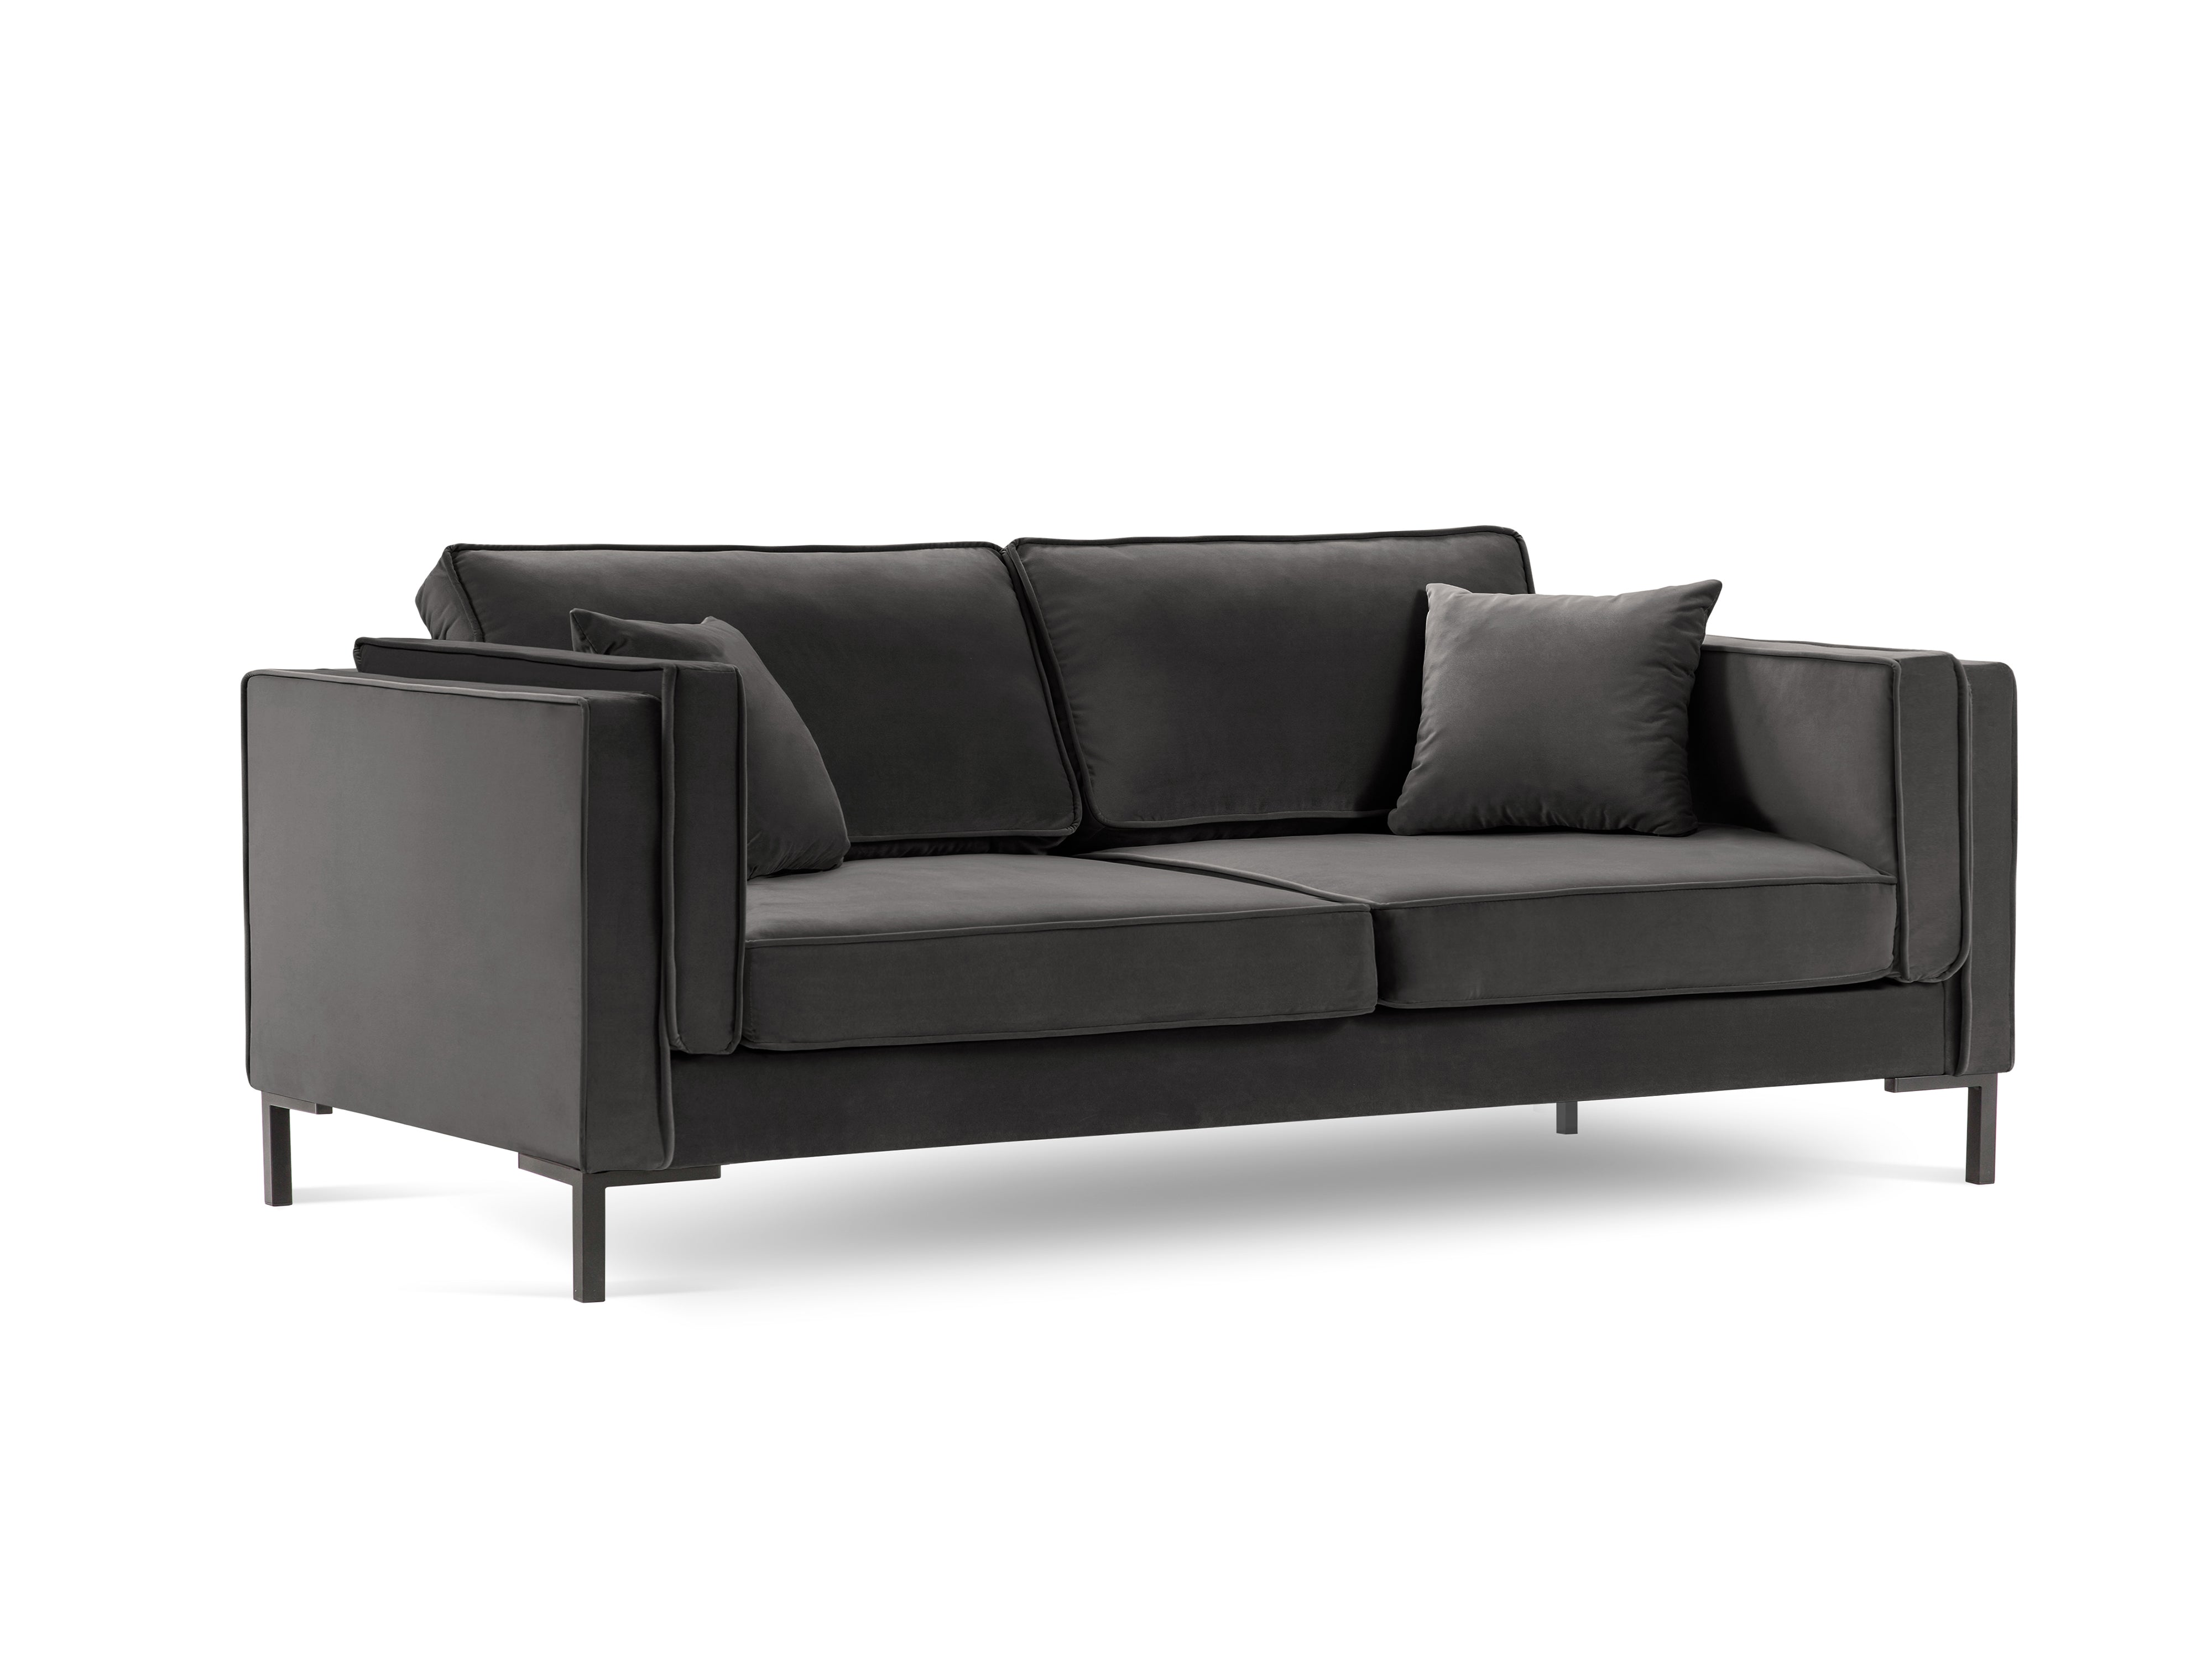 LUIS dark grey velvet 4-seater sofa with black base